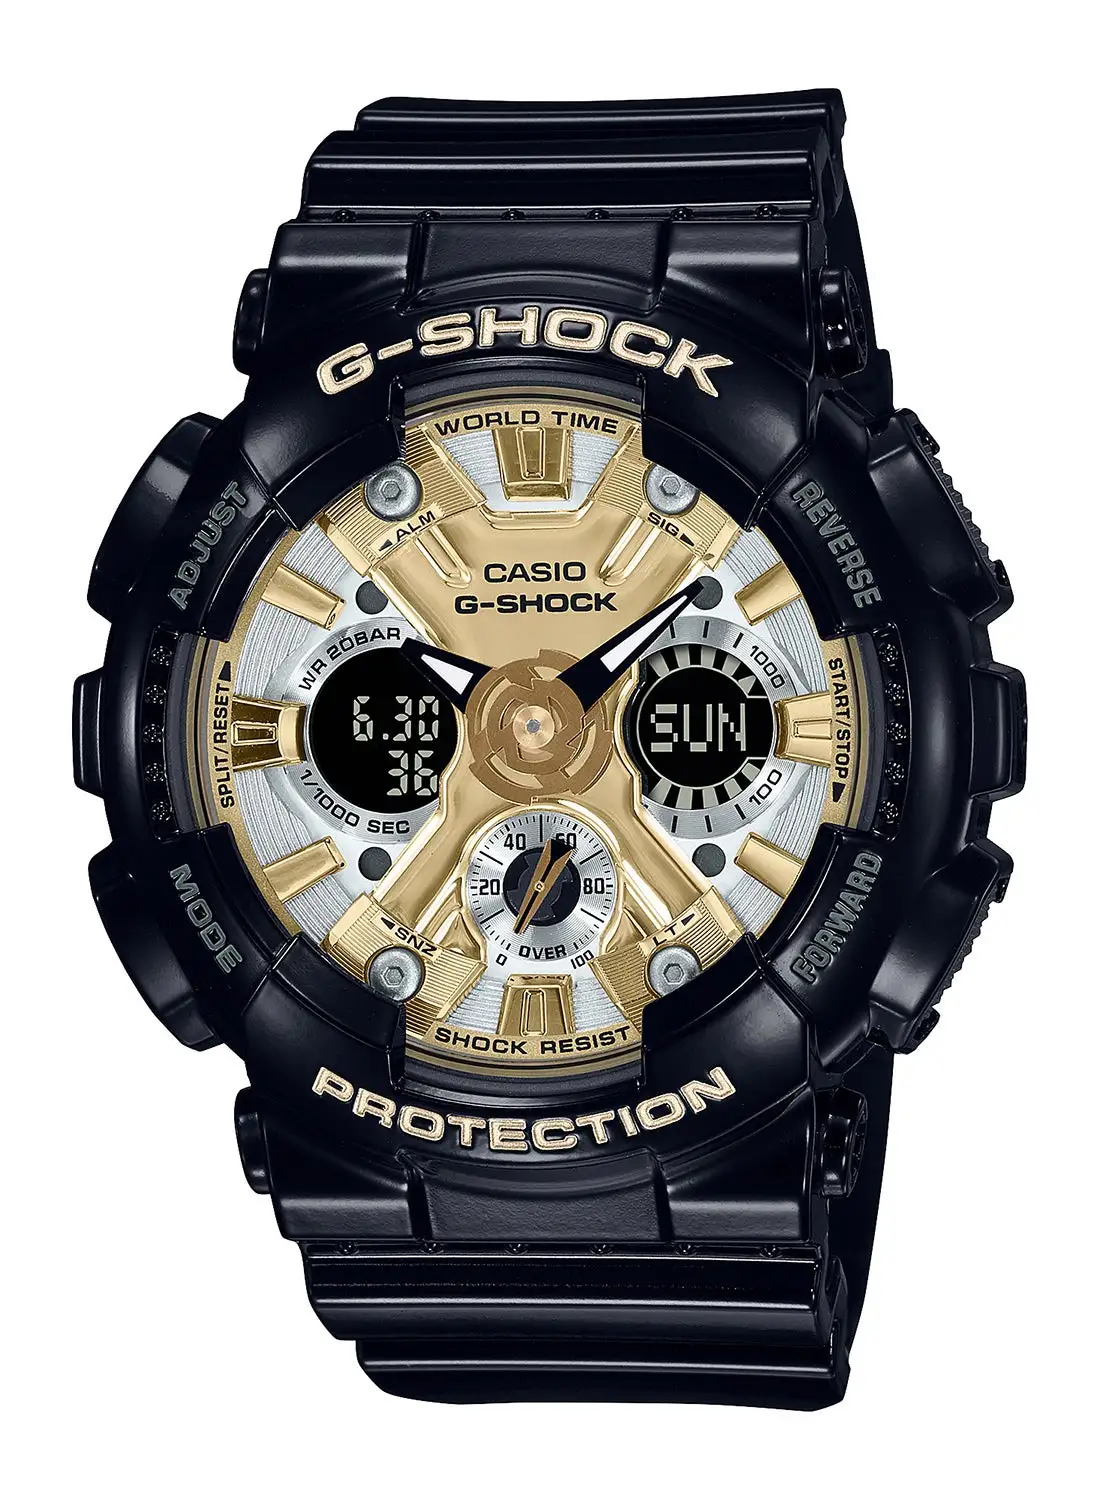 G-SHOCK Women's Analog+Digital Resin Wrist Watch GMA-S120GB-1ADR - 38 Mm